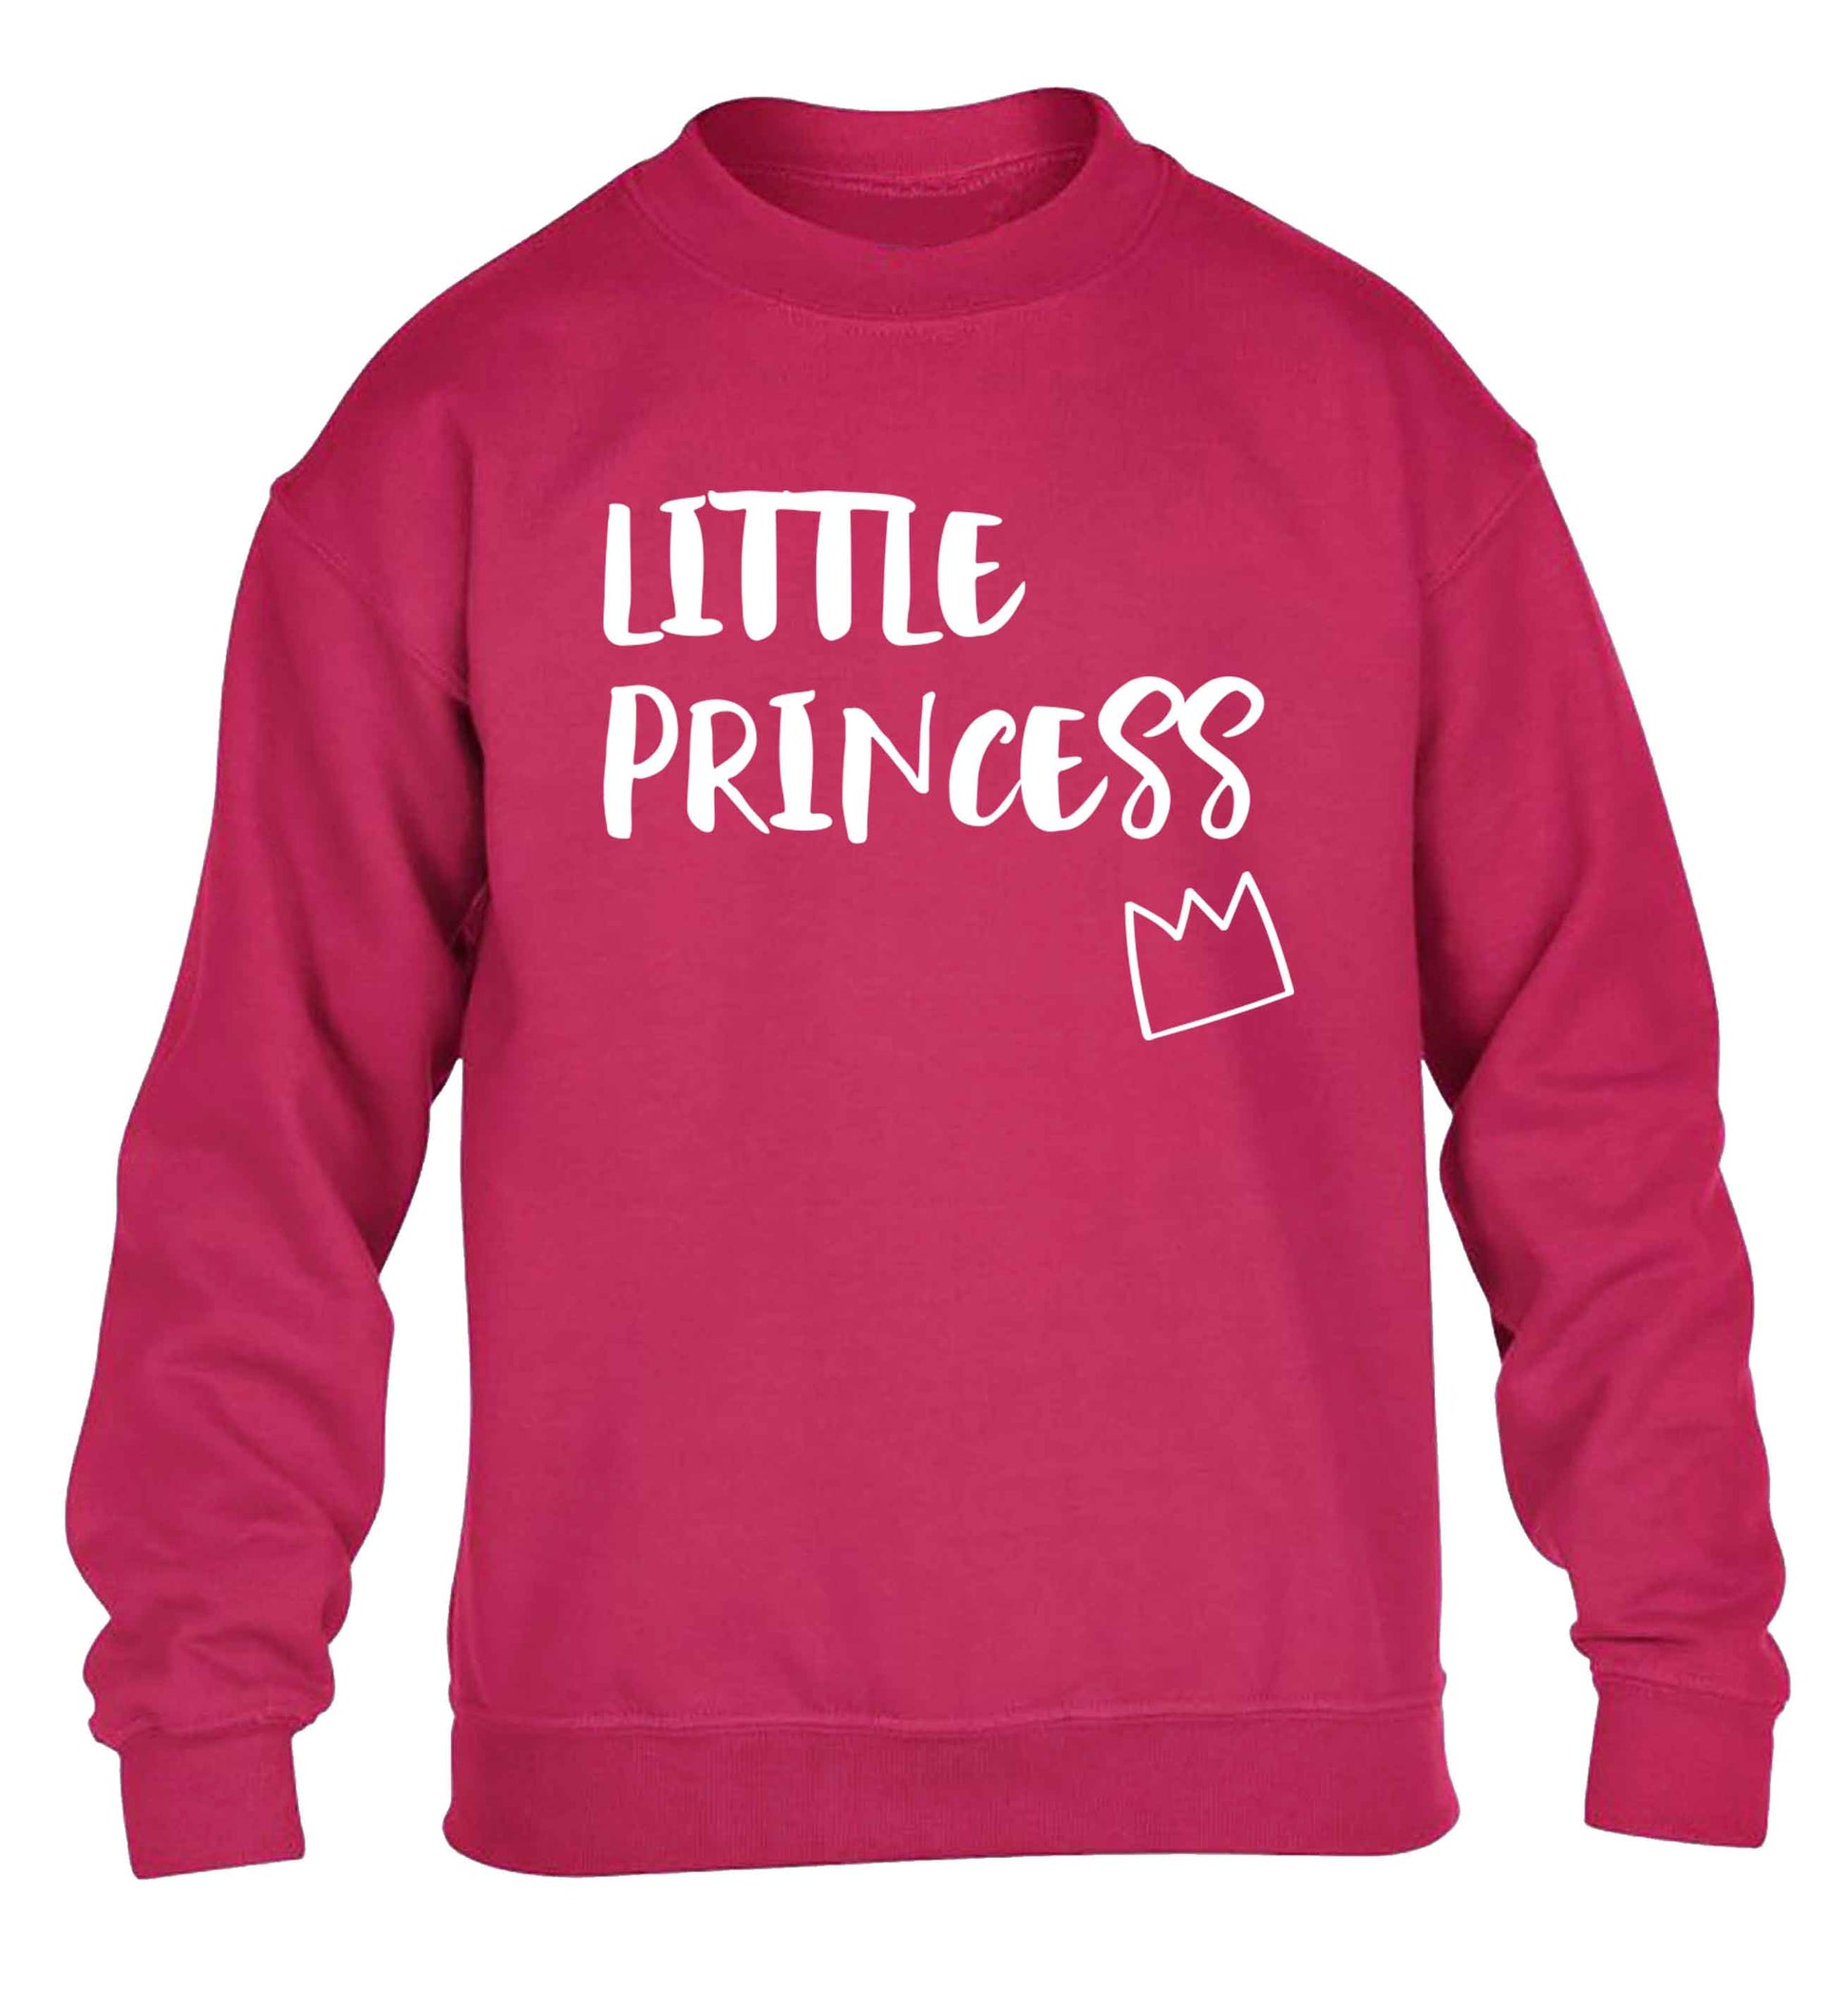 Little princess children's pink sweater 12-13 Years